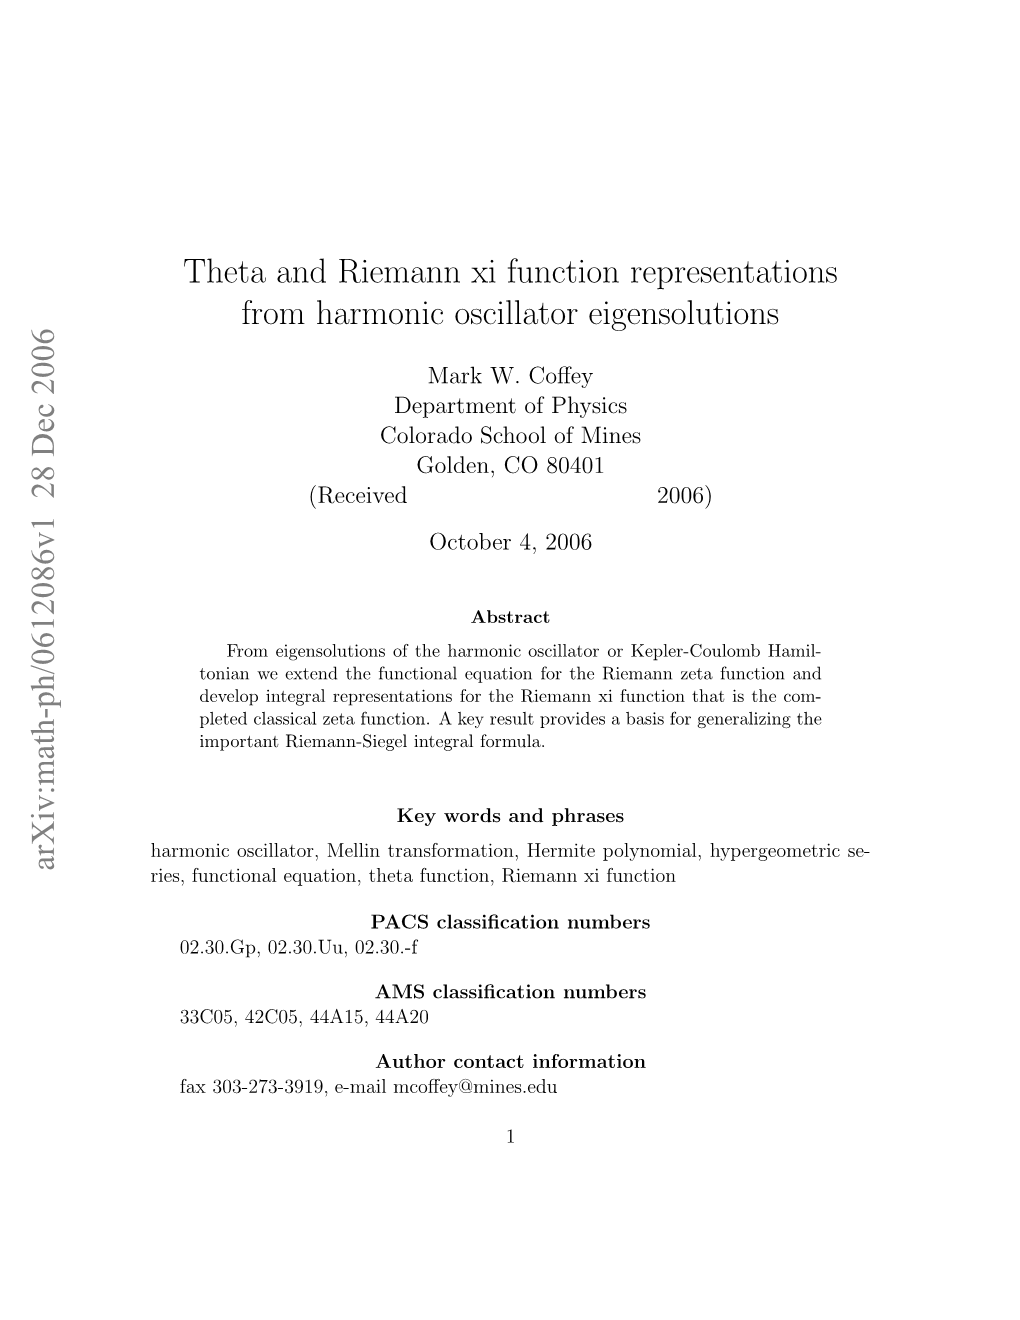 Theta and Riemann Xi Function Representations from Harmonic